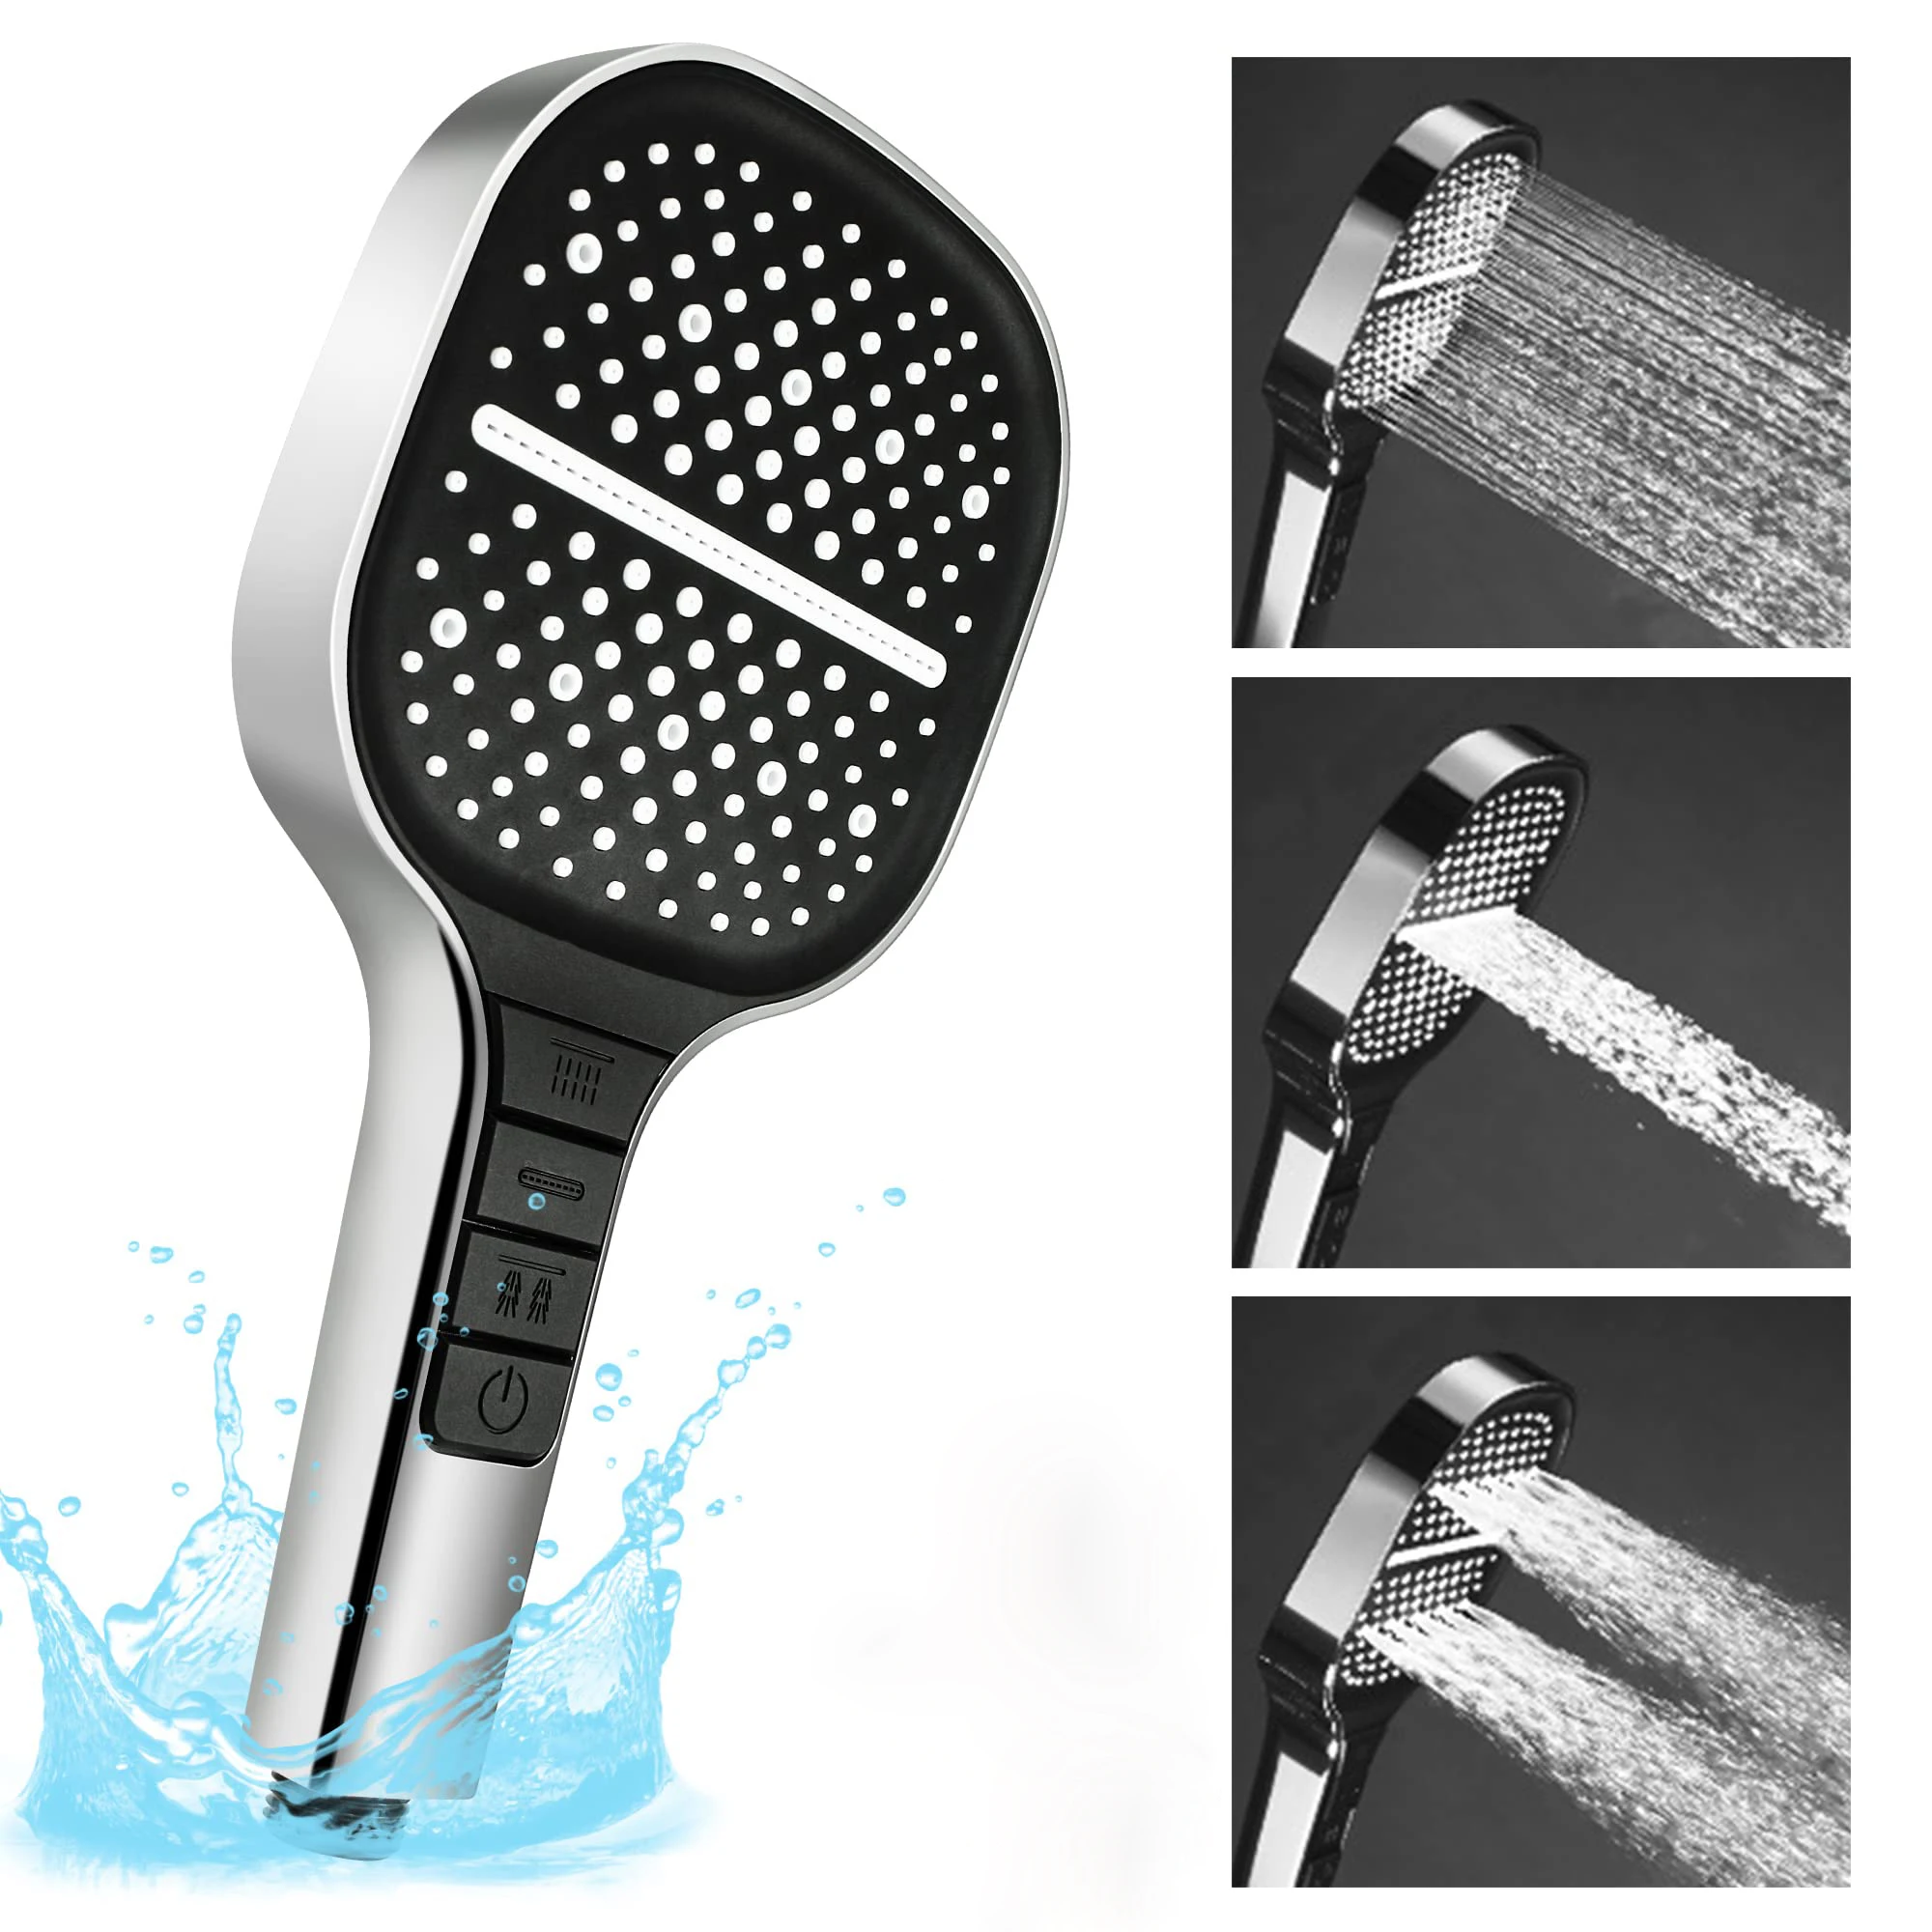 

Zhangji Spa Shower Head Rainfall 8 Mode Shower Faucet Large Panel Flow Rainfall Skin Spa ABS Hand Held Shower Bathroom Accessory